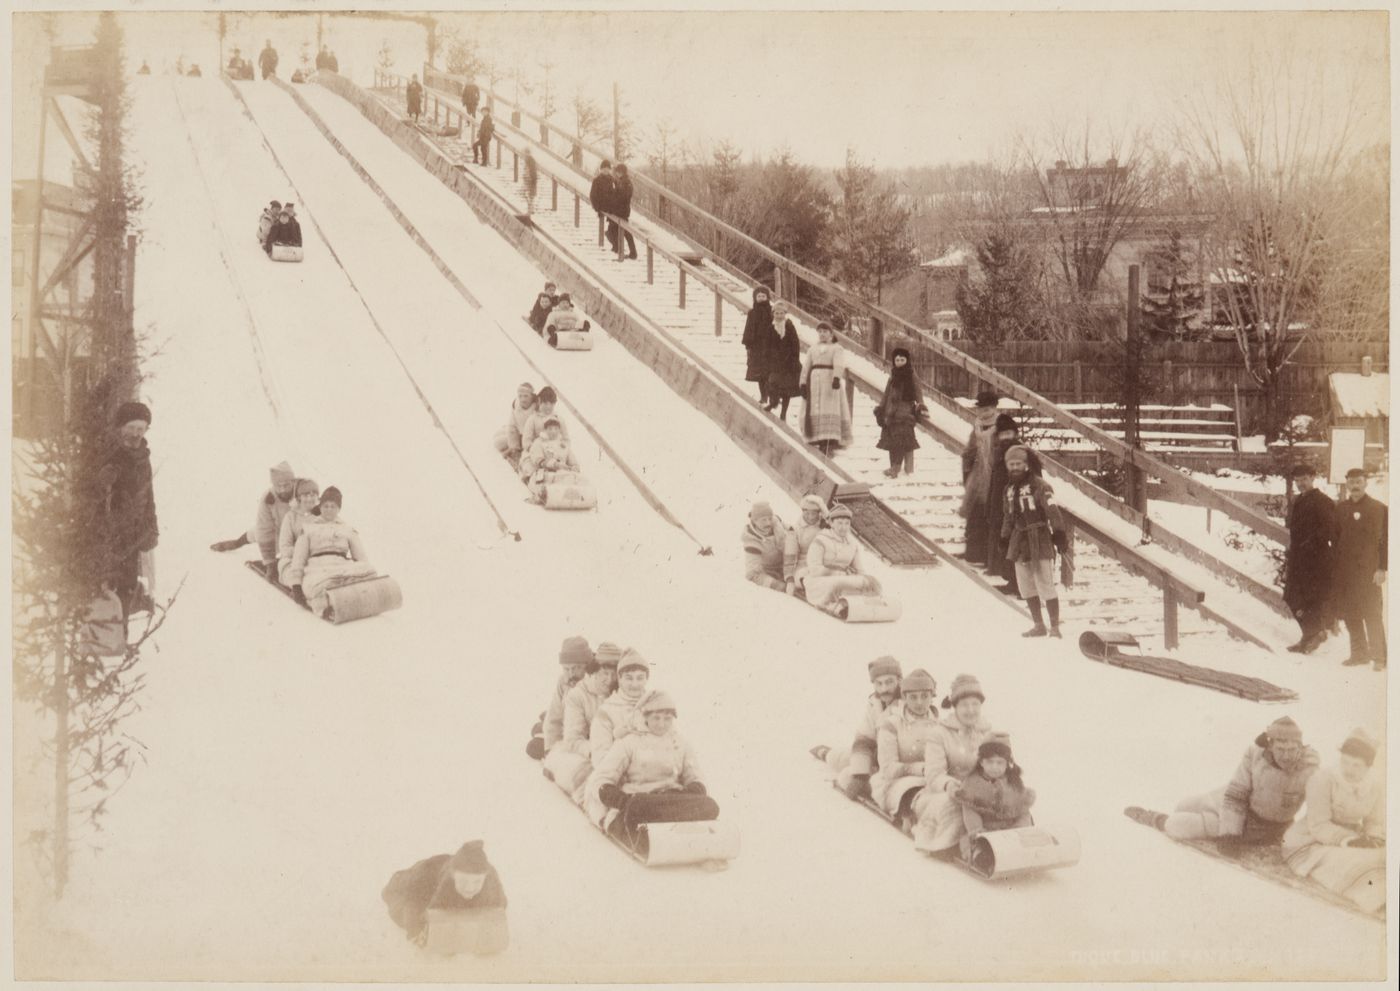 View of members of the Tuque Blue Snow Shoe Club sledding down a toboggan run, Montréal, Québec